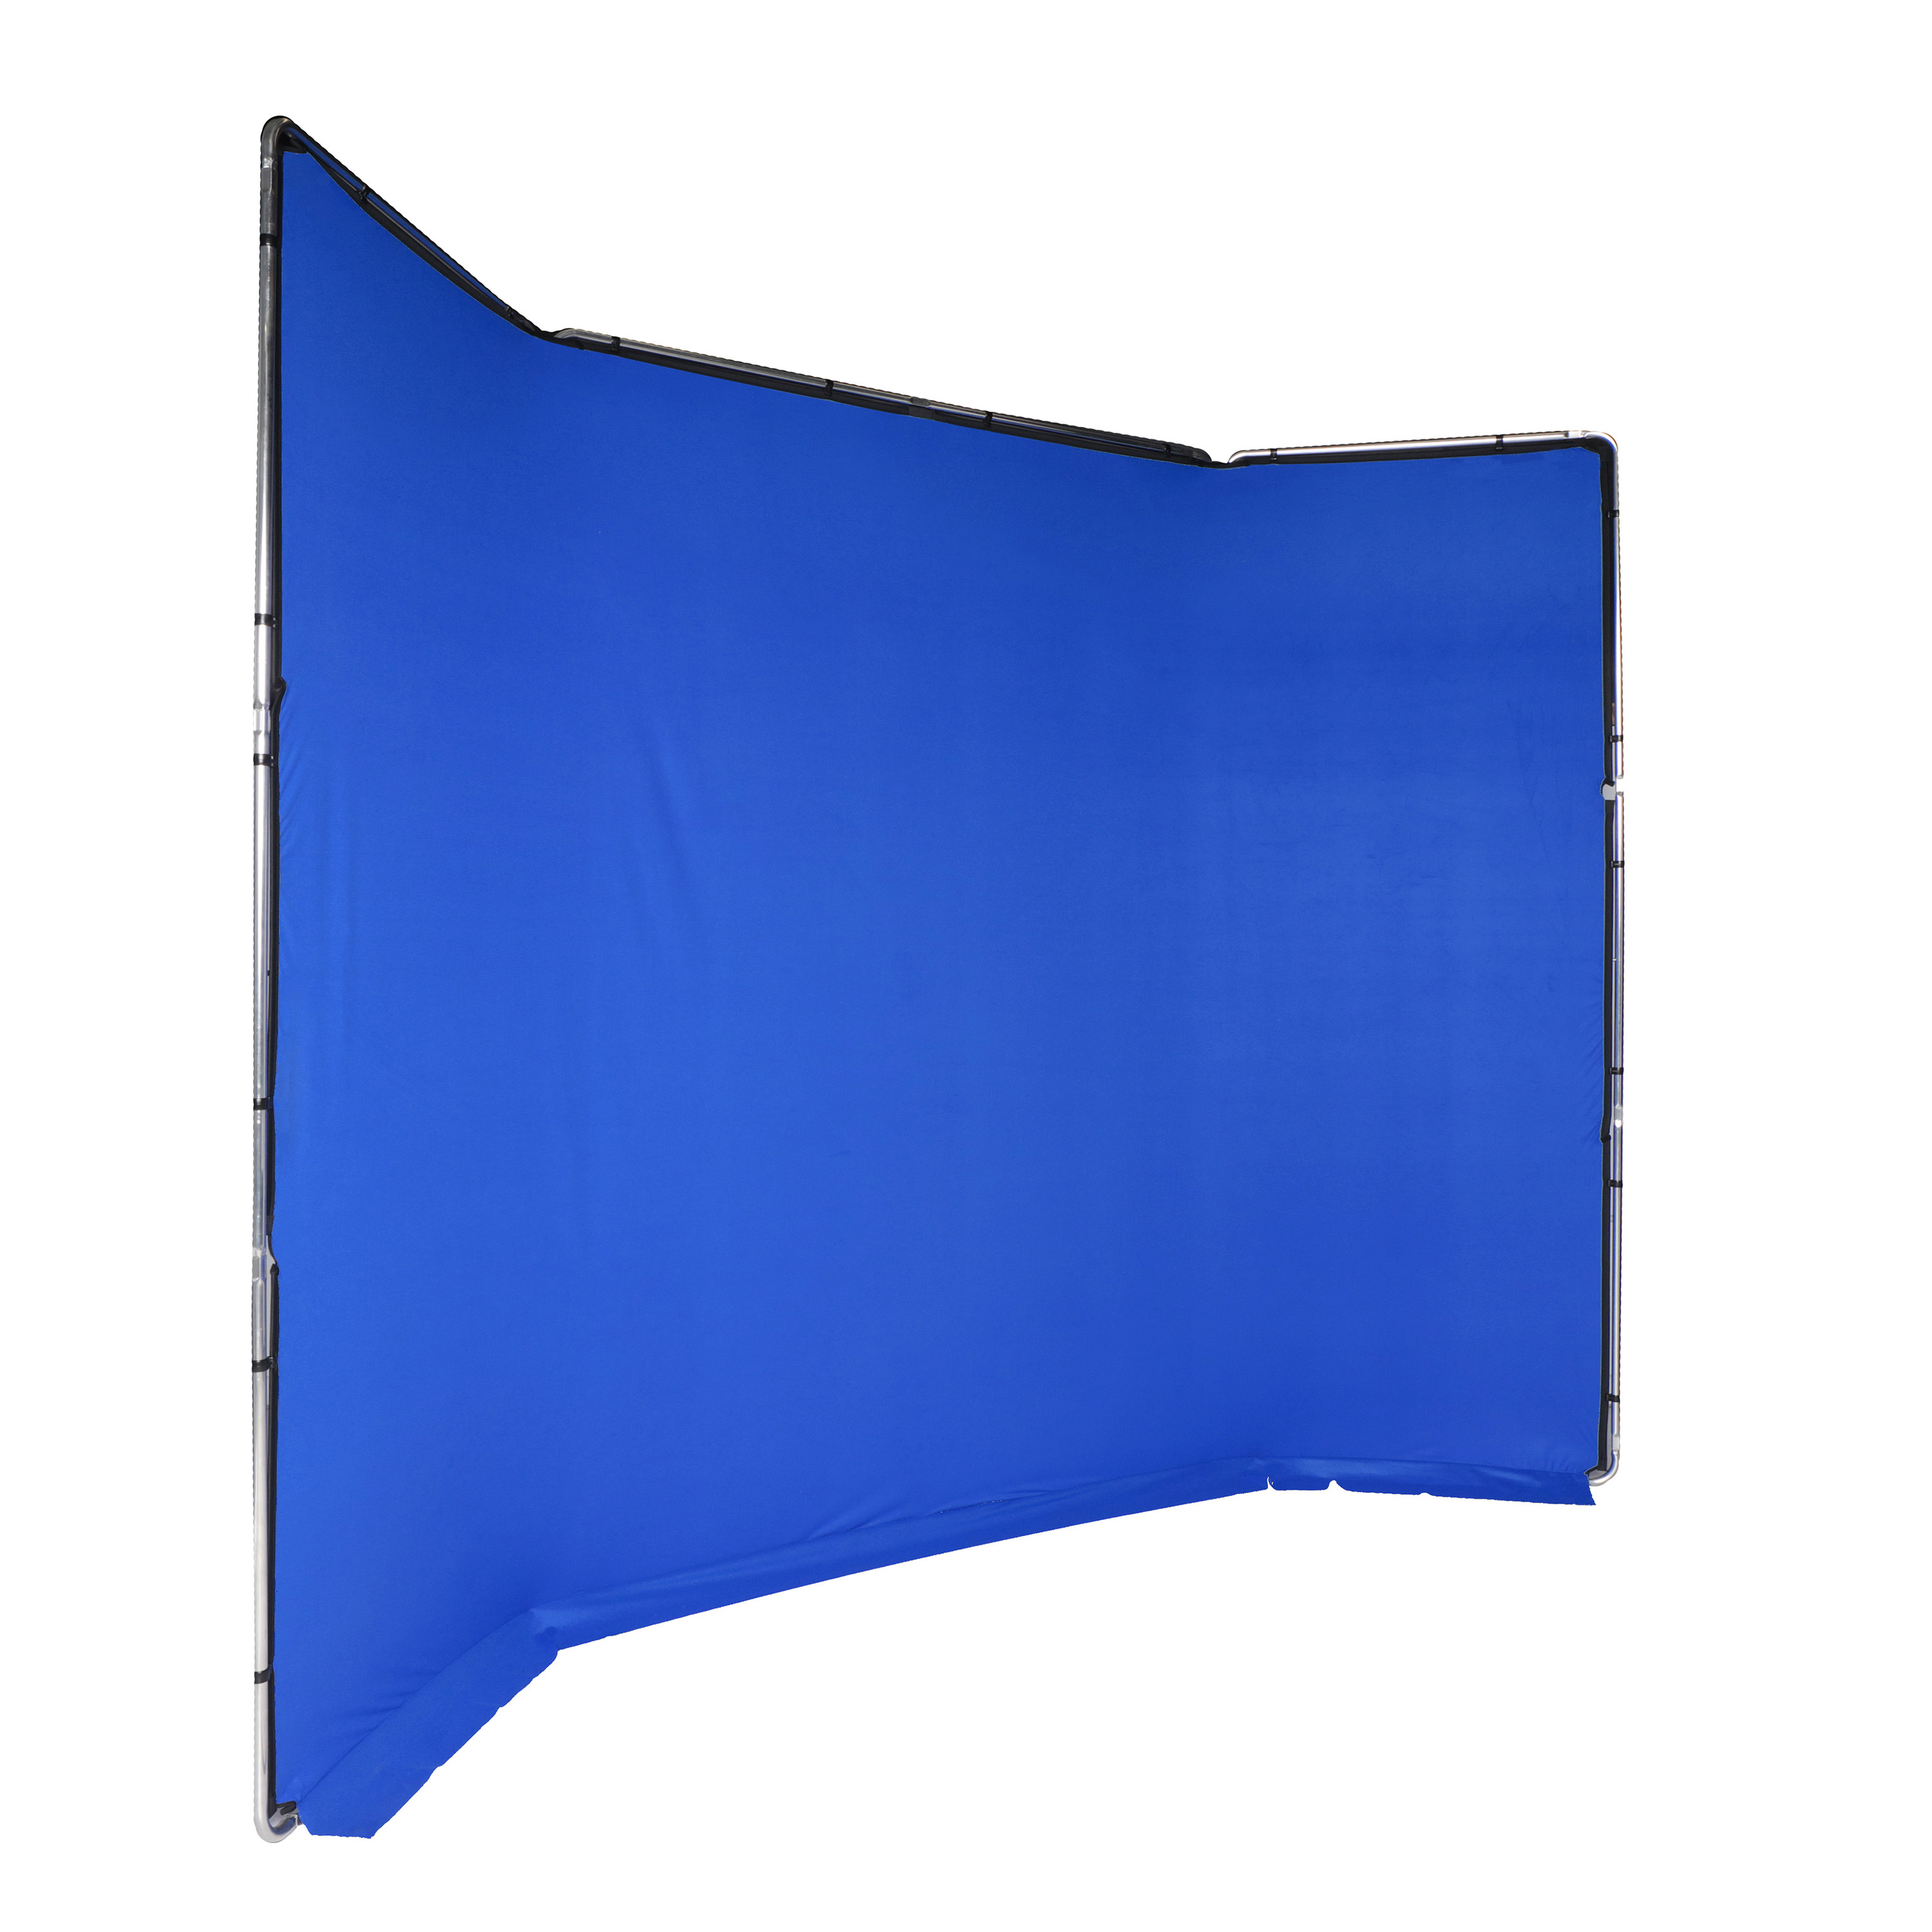 Hintergrund-Kit Manfrotto Chroma Key FX 4 x 2,9 m, Blau